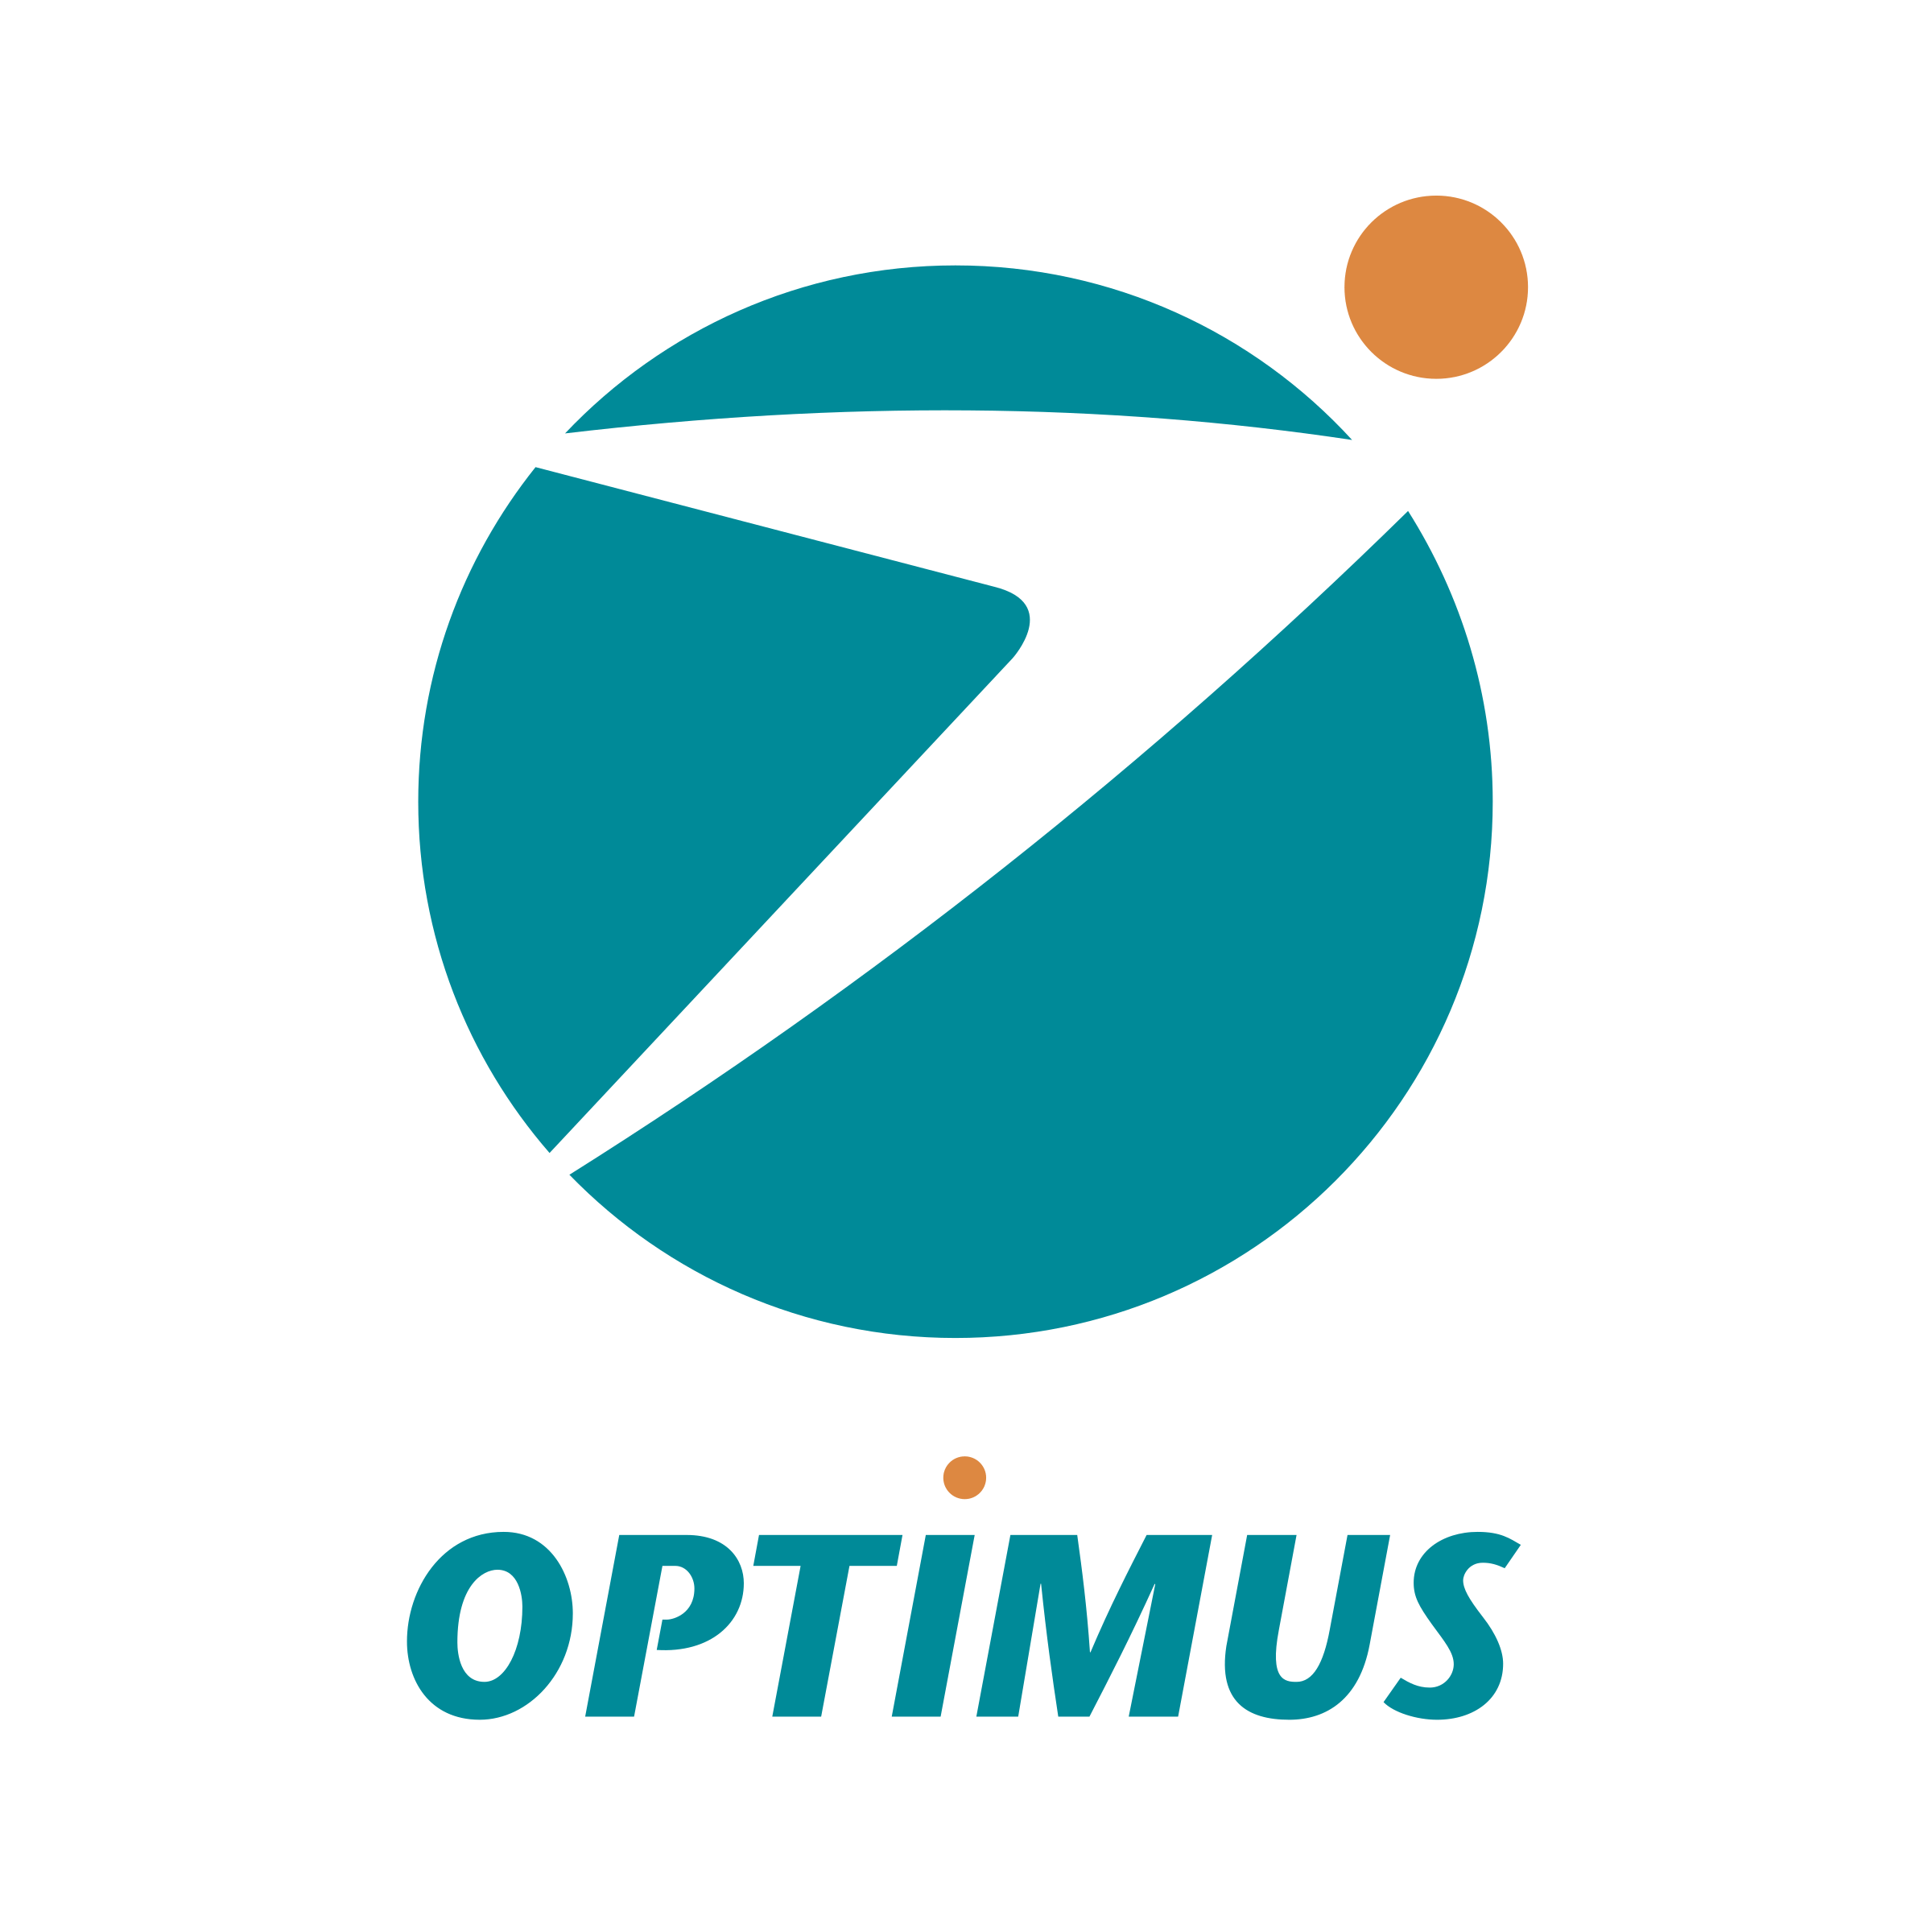 Optimus Logo - Optimus Logo PNG Transparent & SVG Vector - Freebie Supply